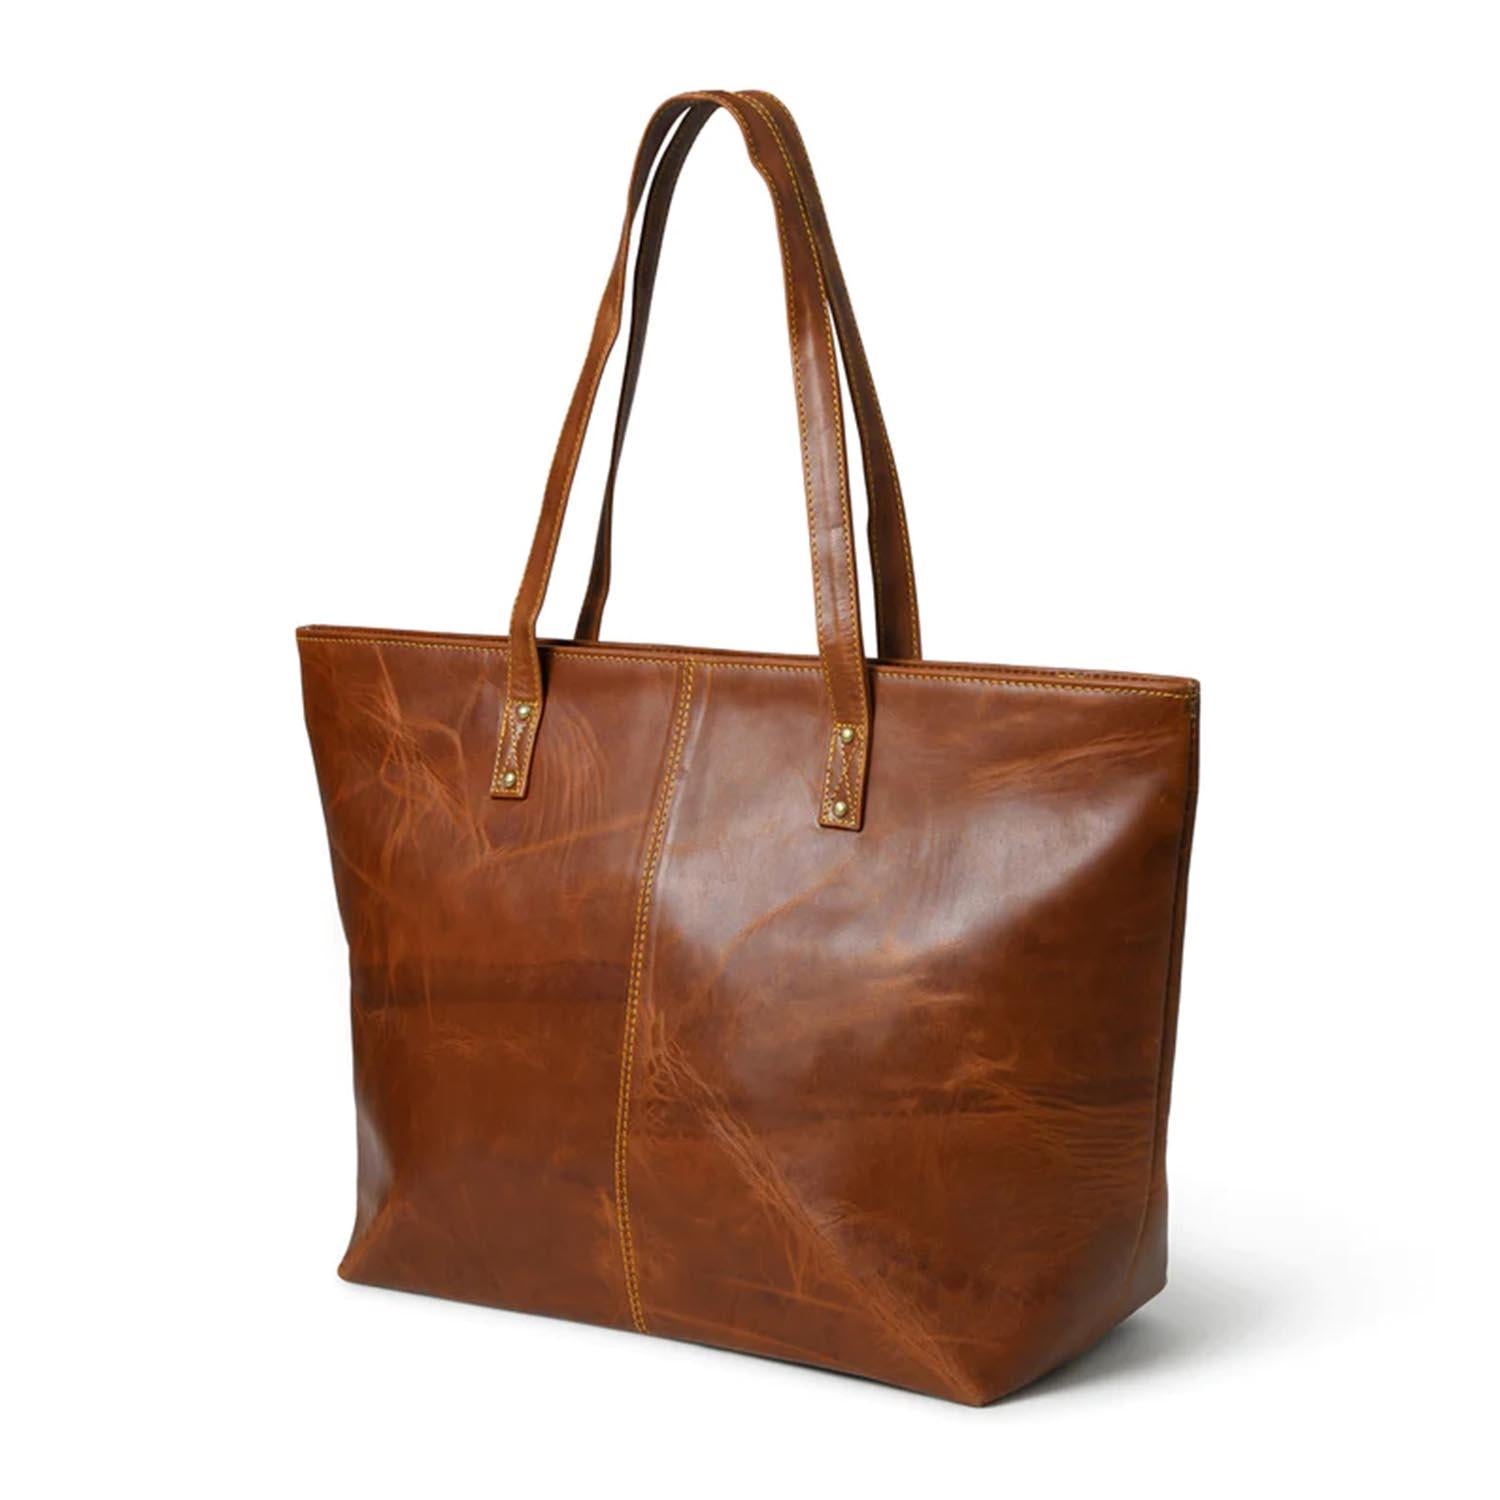 The Kim Women's Leather Tote Bag Cocoa Brown